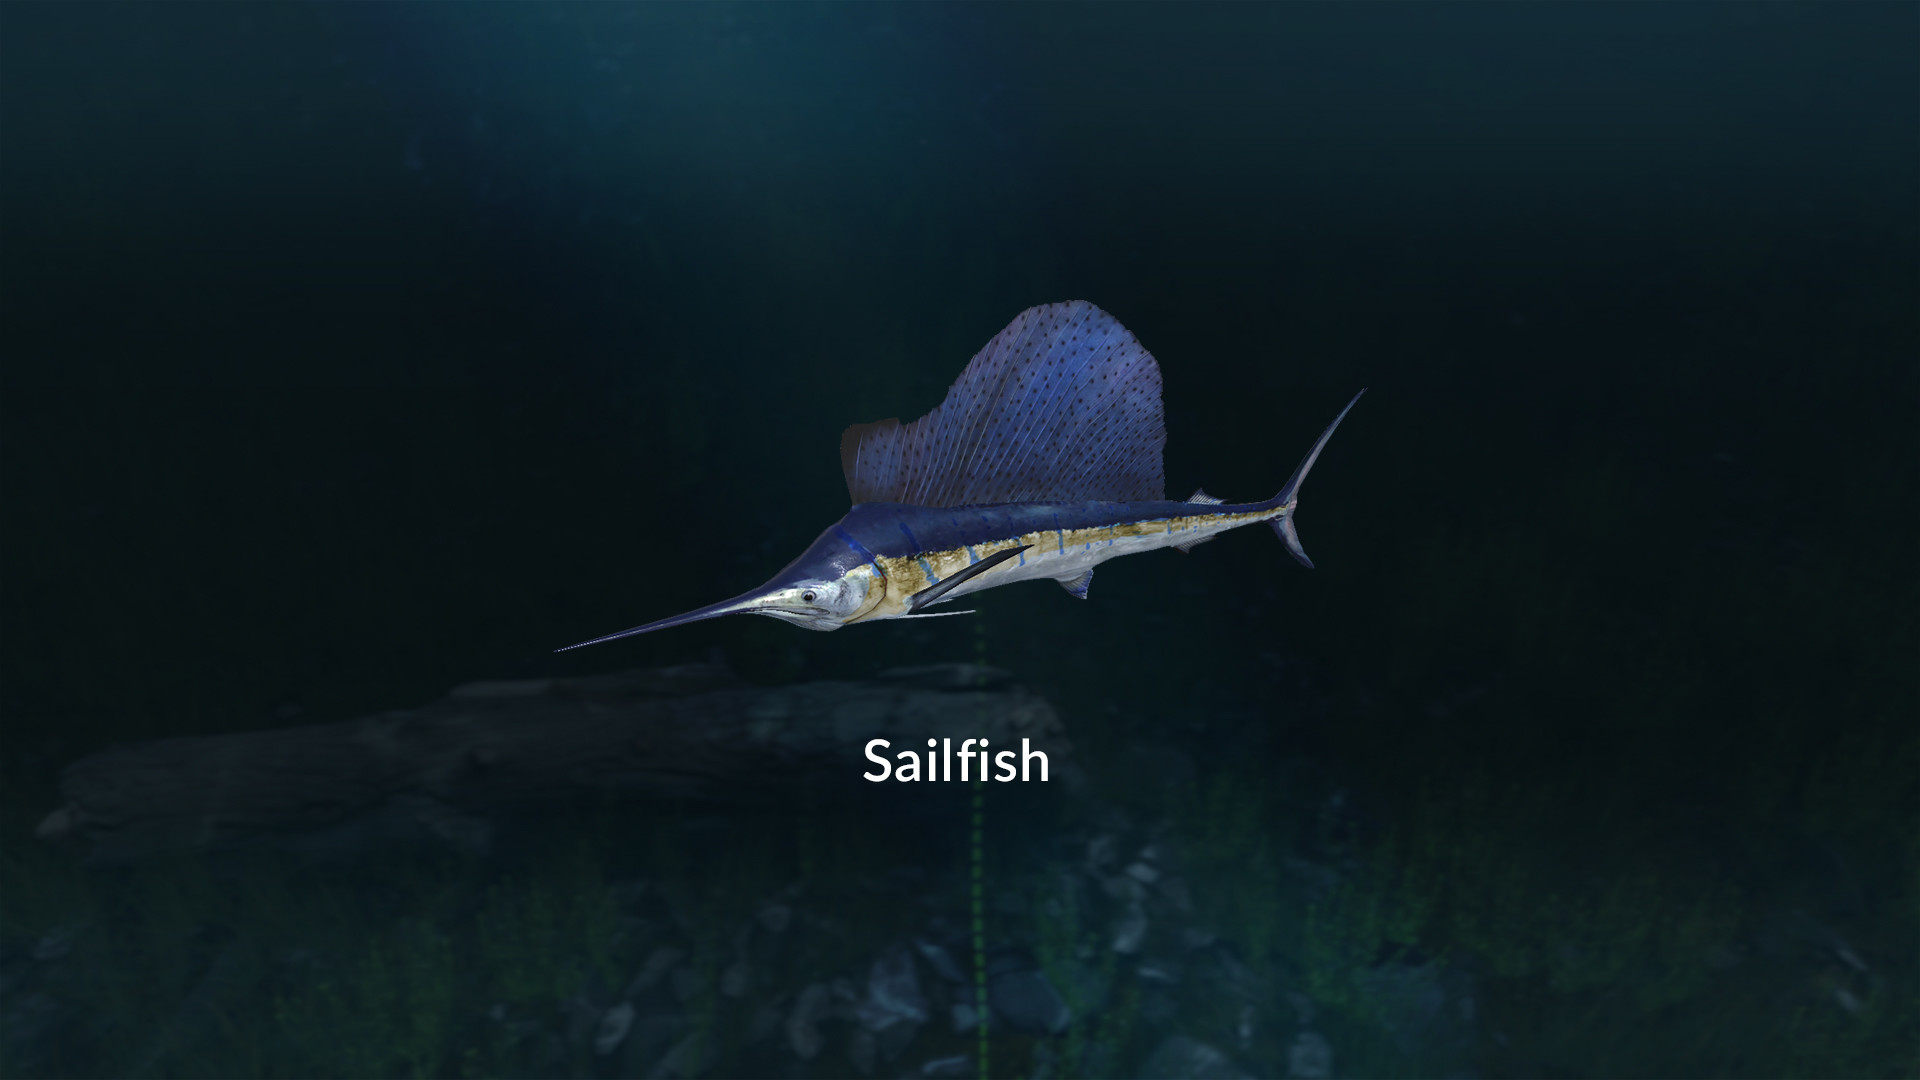 Ultimate Fishing Simulator - New Fish Species DLC Steam CD Key